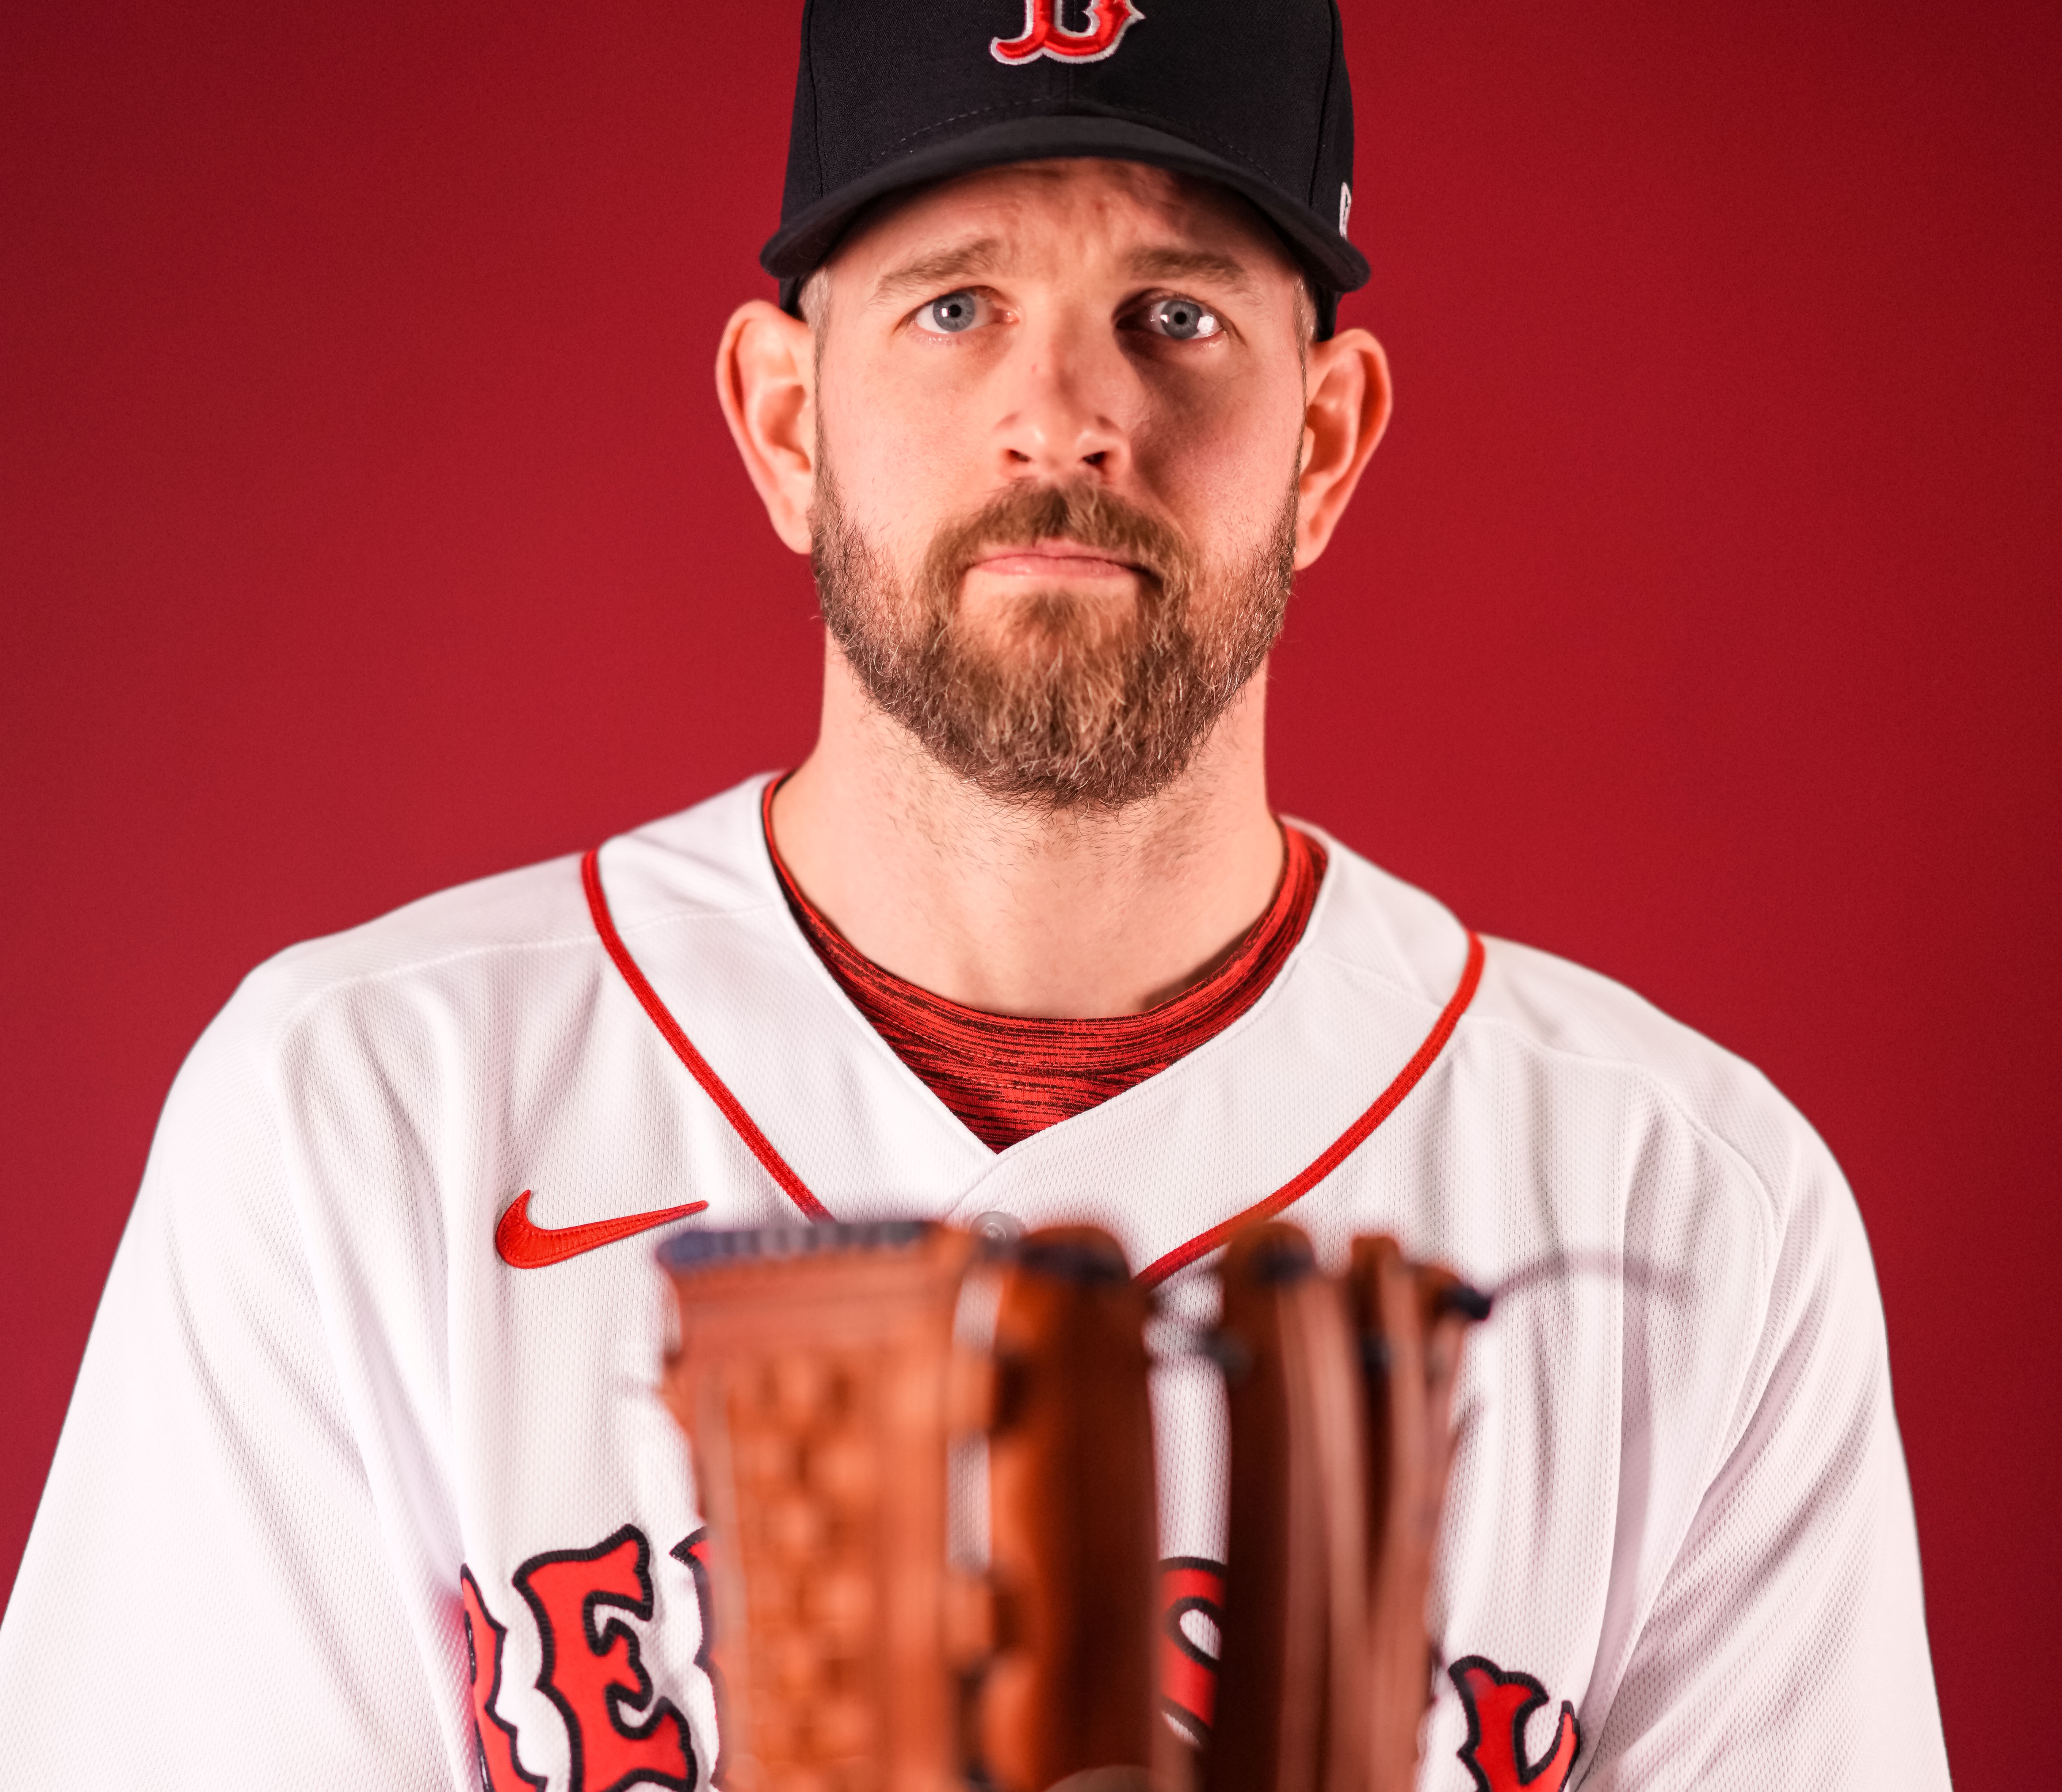 Boston Red Sox's Rich Hill, Jason Varitek test positive for COVID-19 